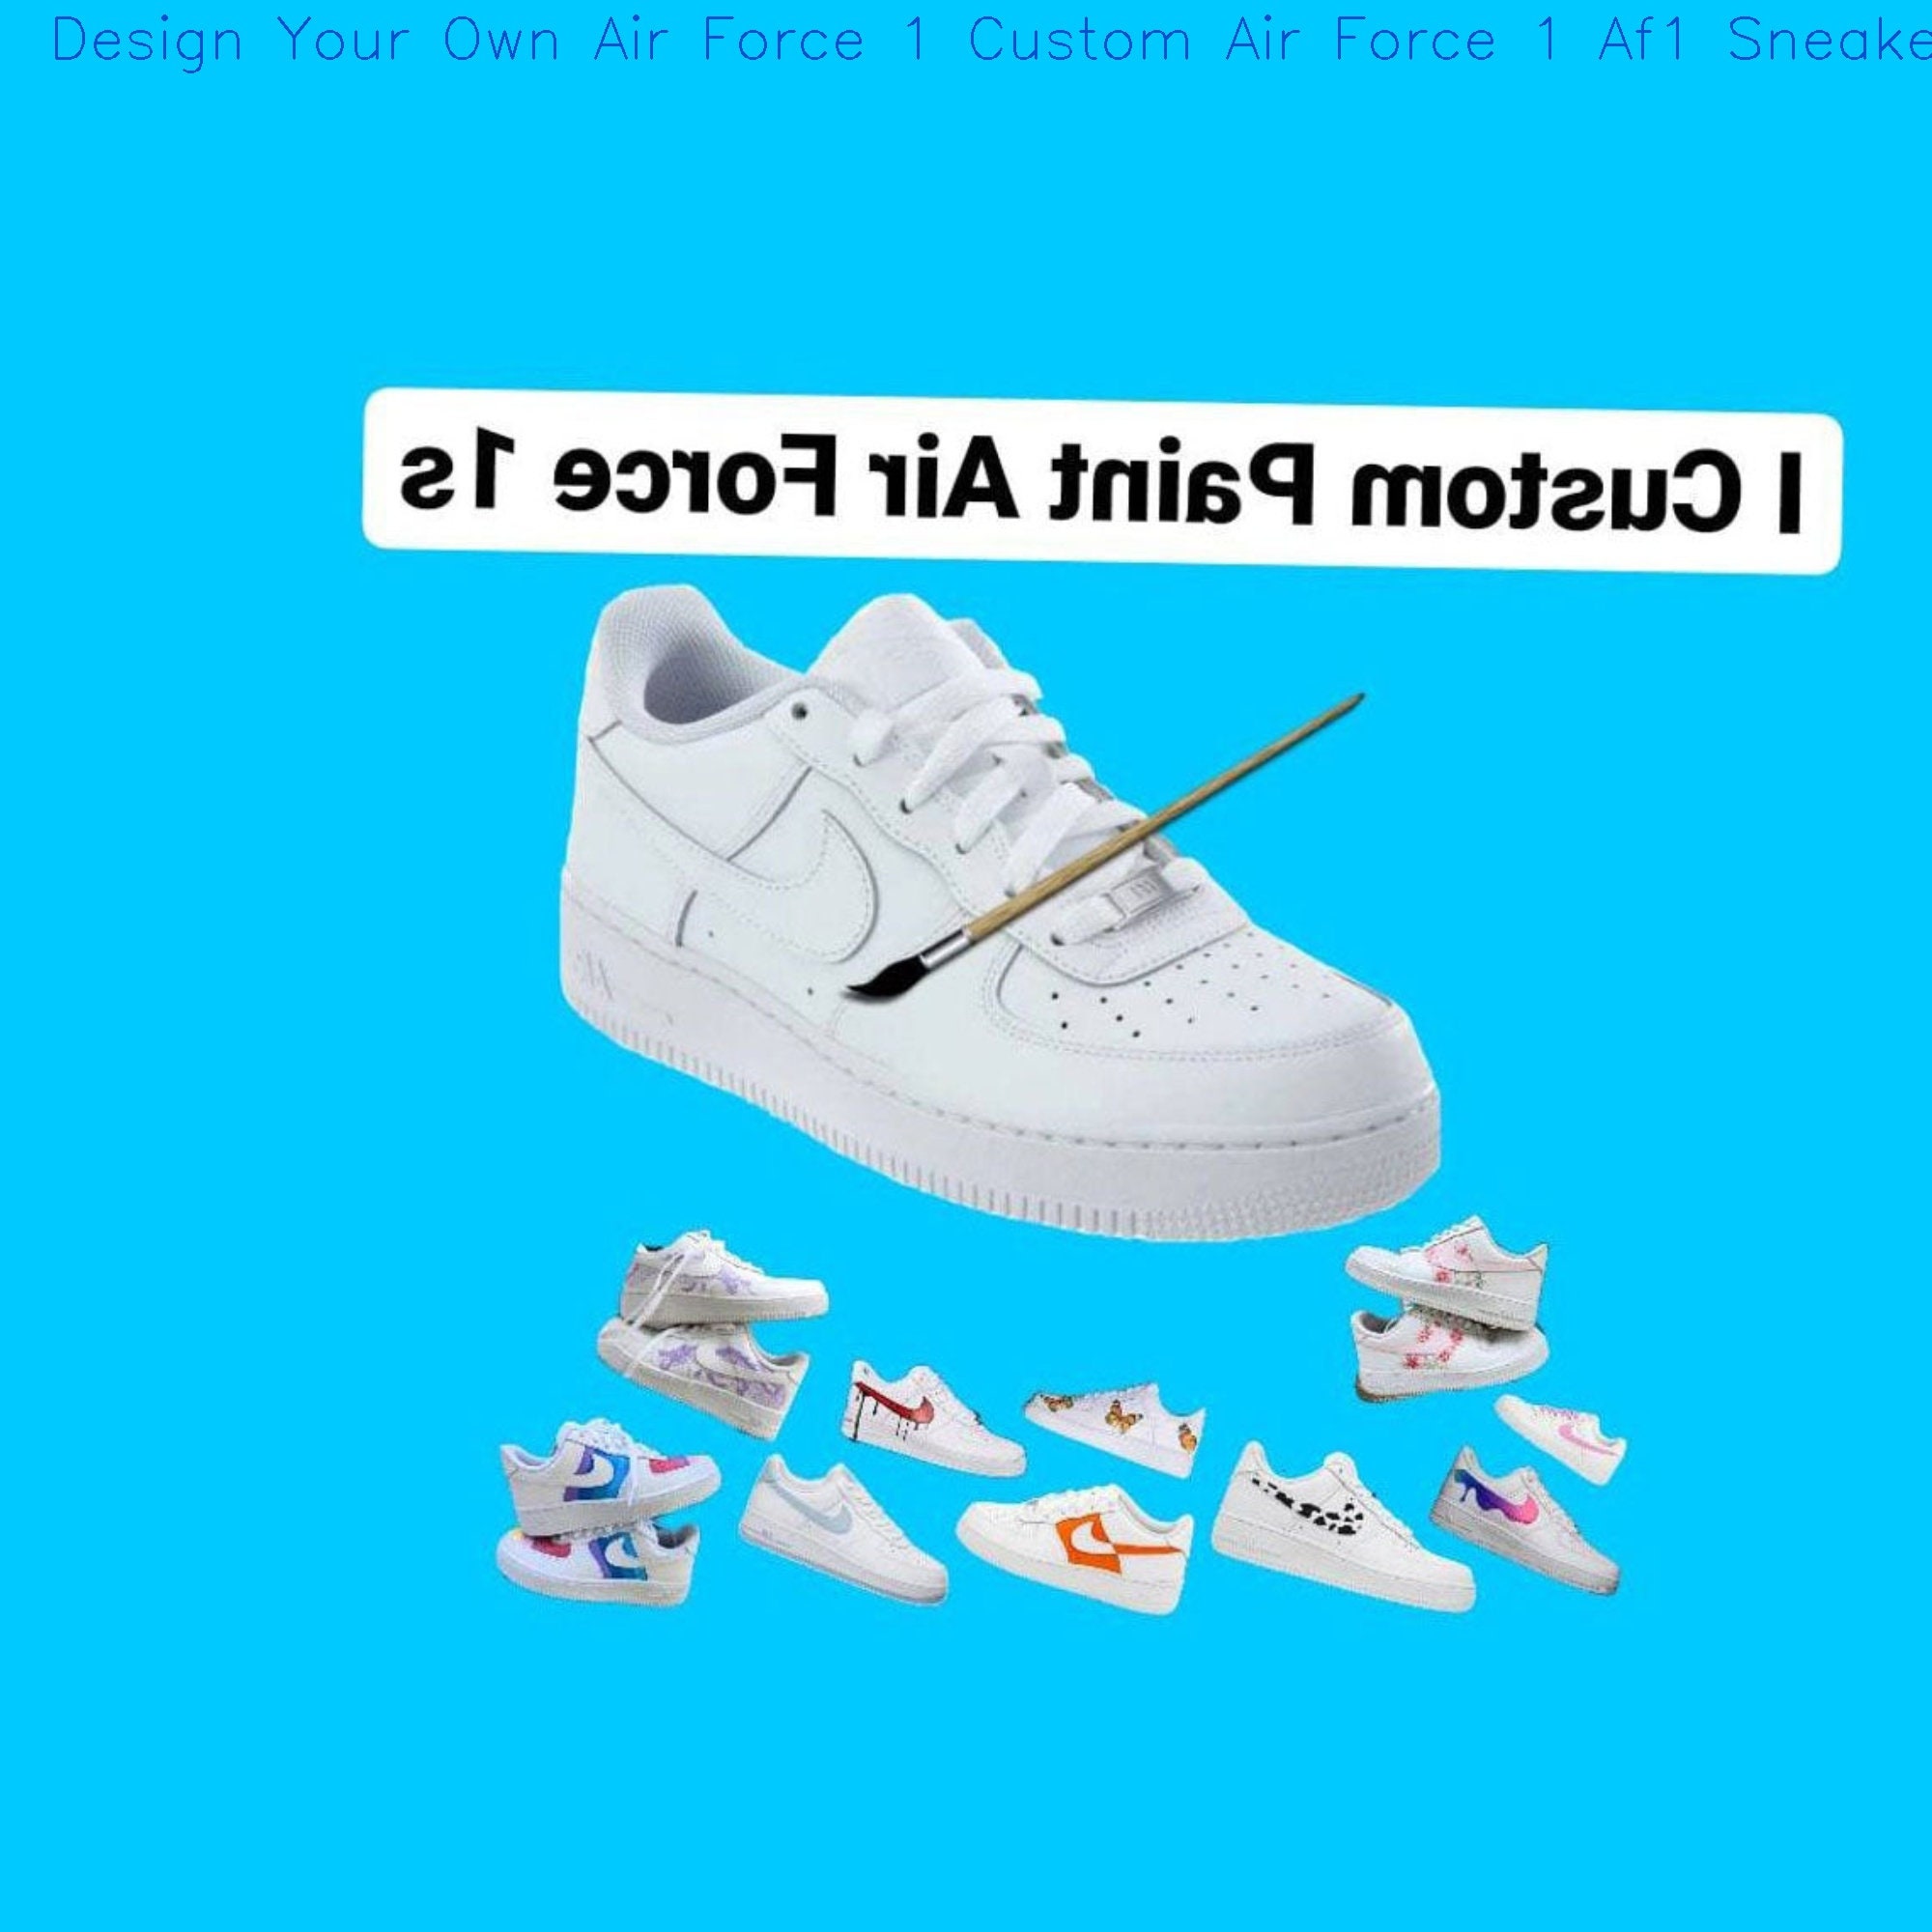 Your Own Custom Made Nike AF1